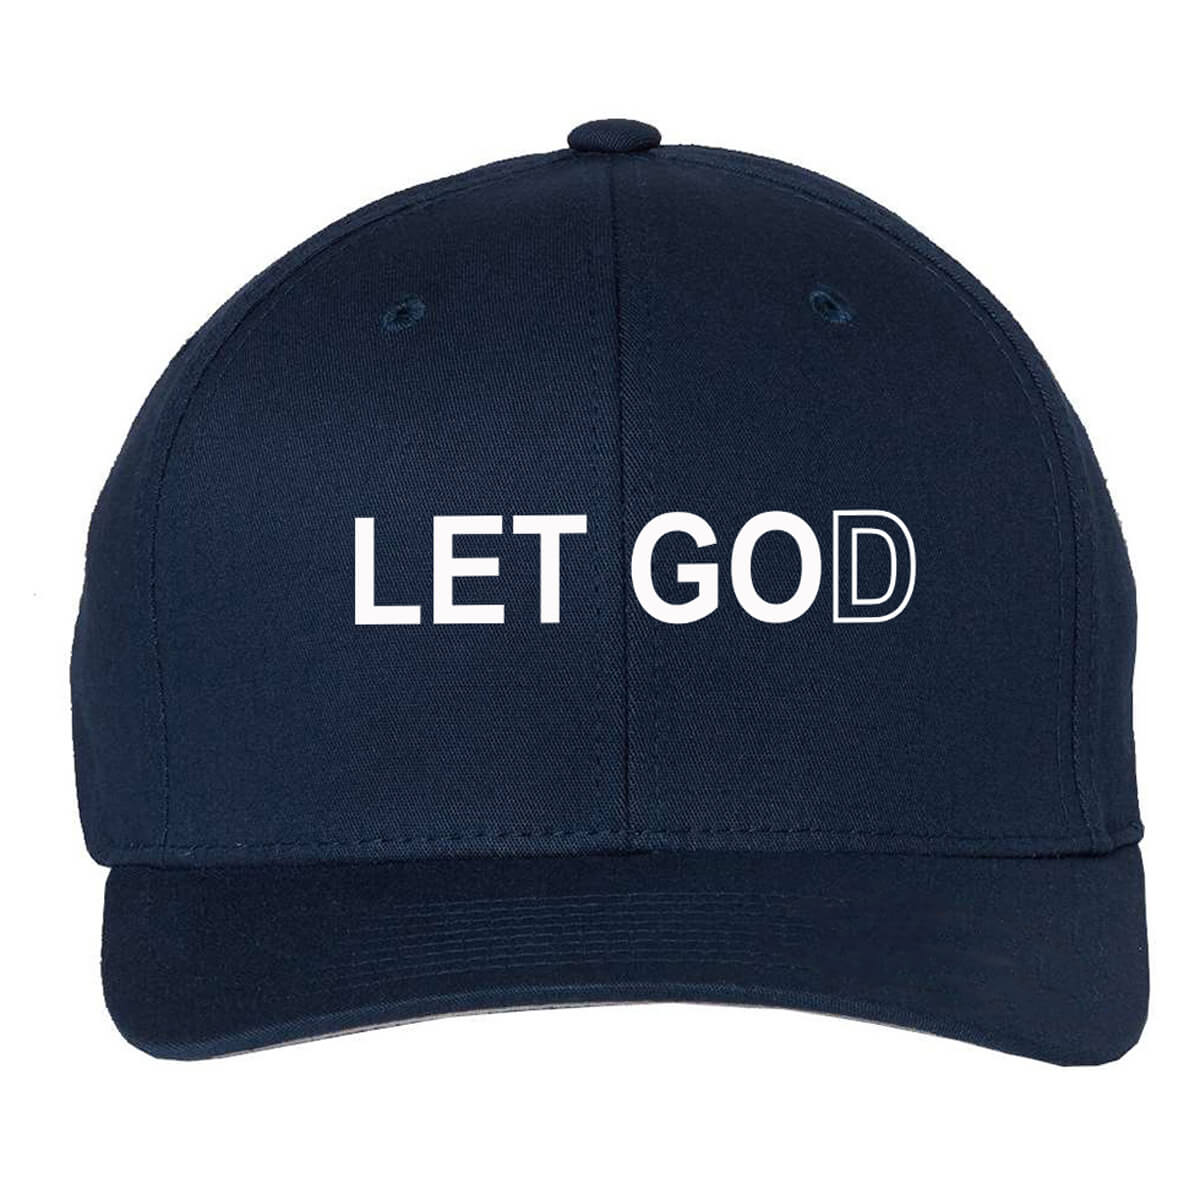 Let Go Let God Embroidered Fitted Cap